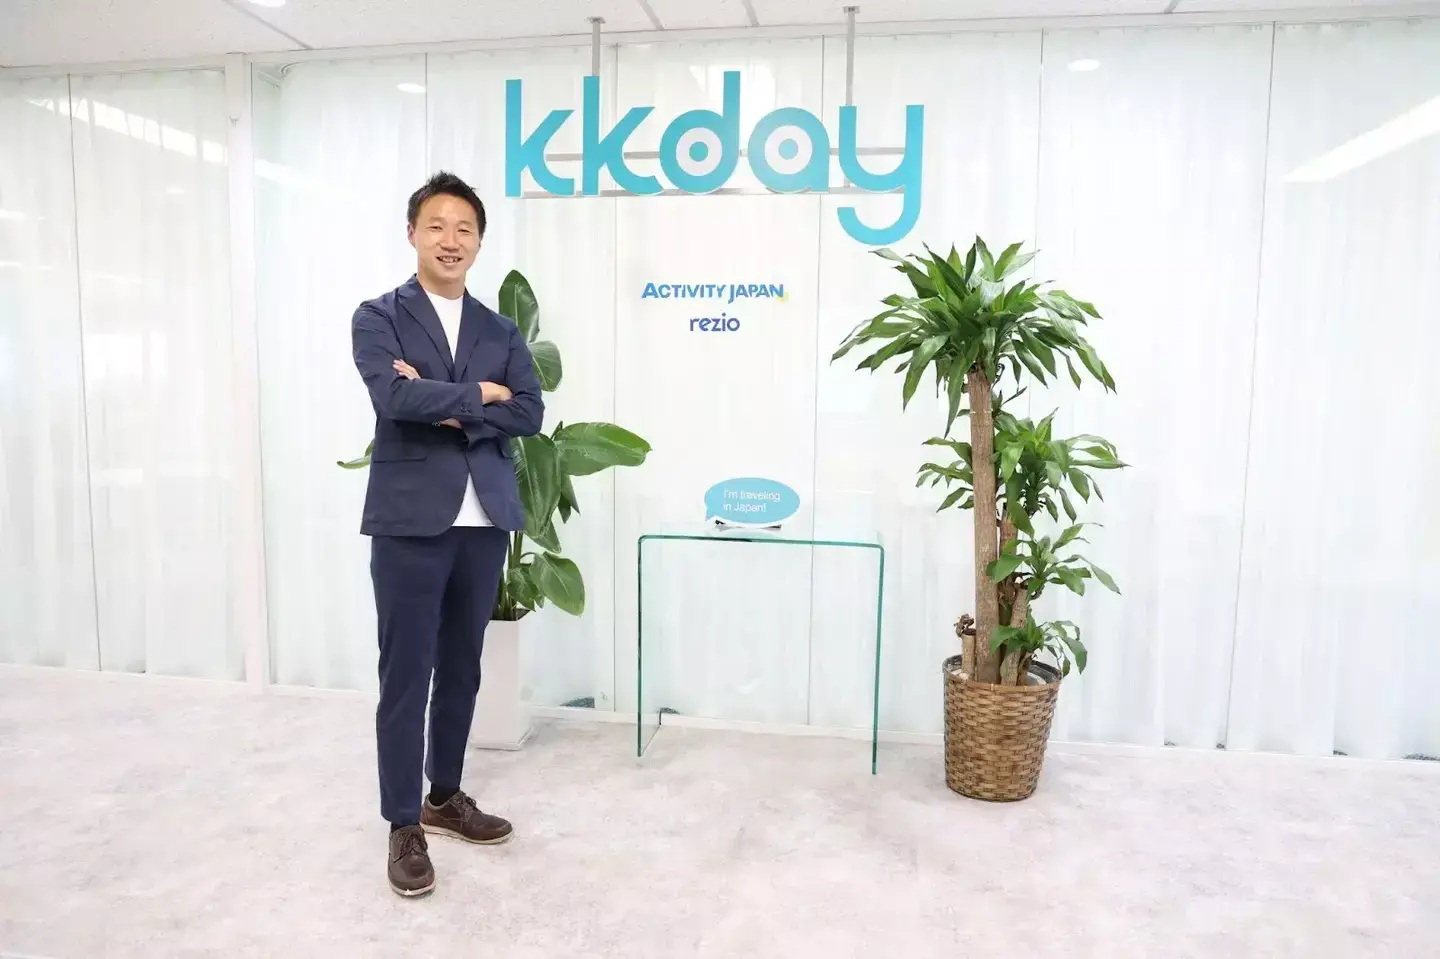 KKday日本支社 最高事業開発責任者就任のお知らせ